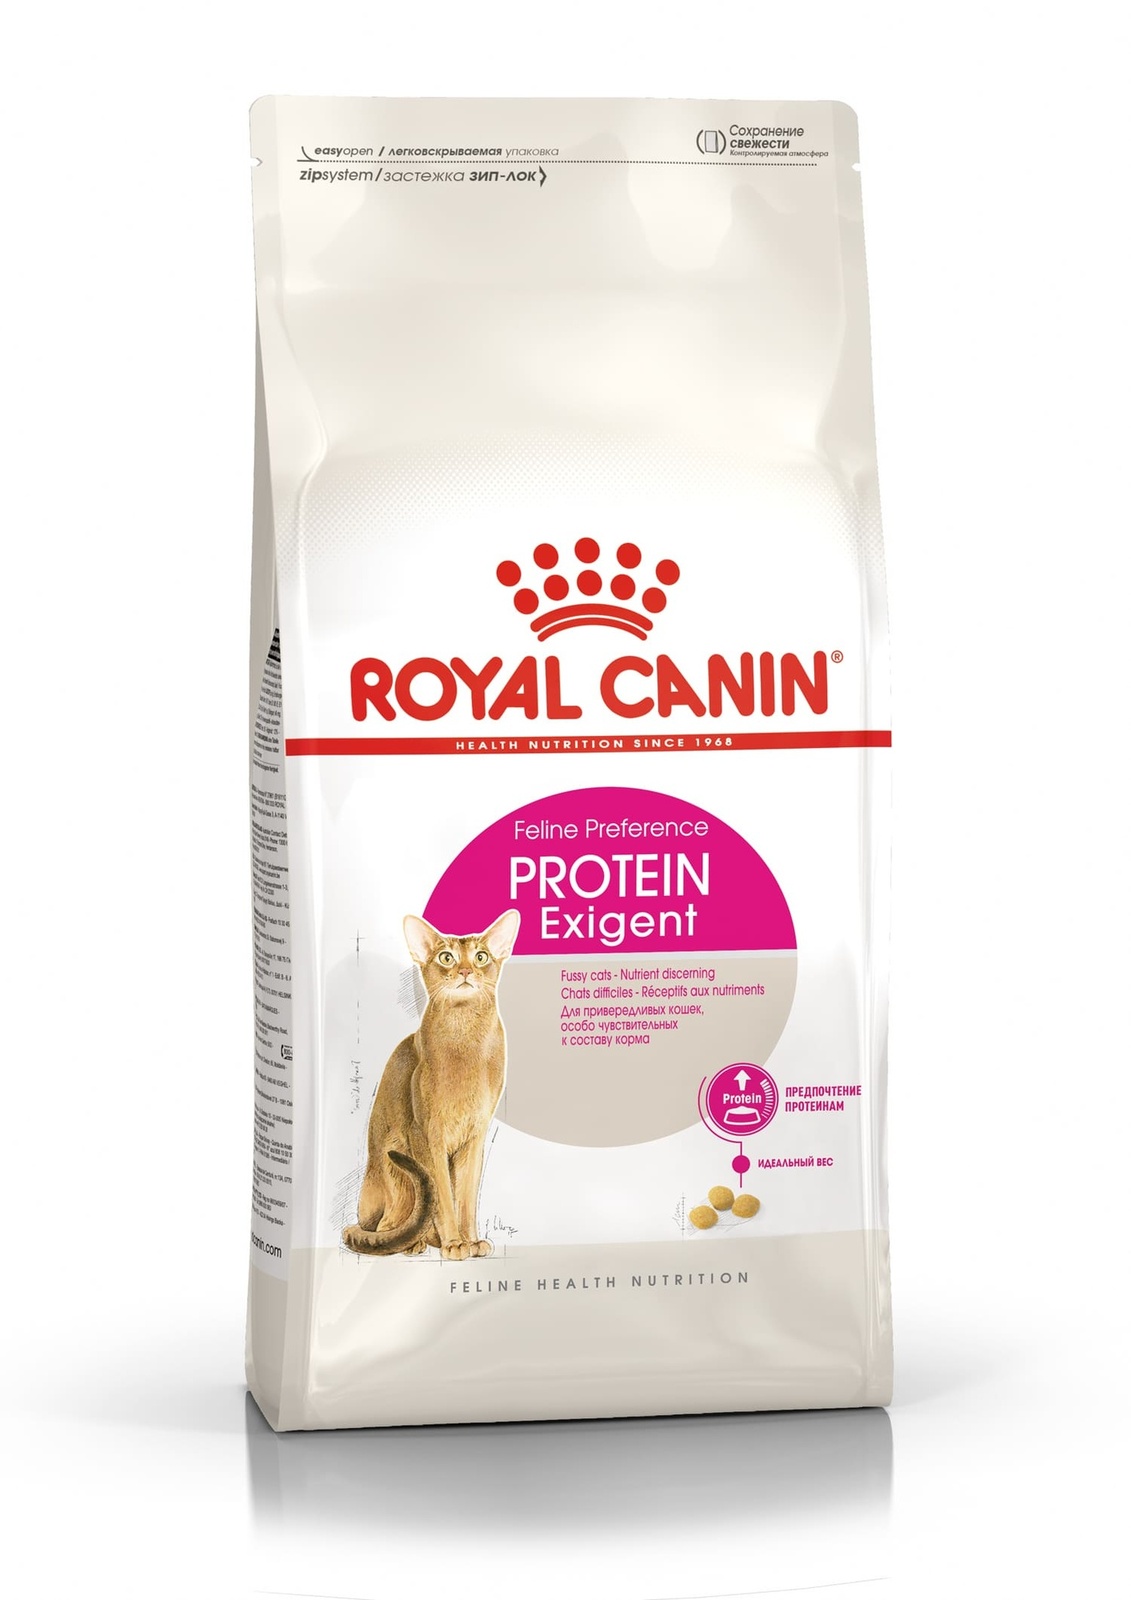 Royal Canin Корм Royal Canin для кошек привередливых в питании (1-12 лет) (2 кг) royal canin корм royal canin для кошек привередливых в питании 1 12 лет 2 кг